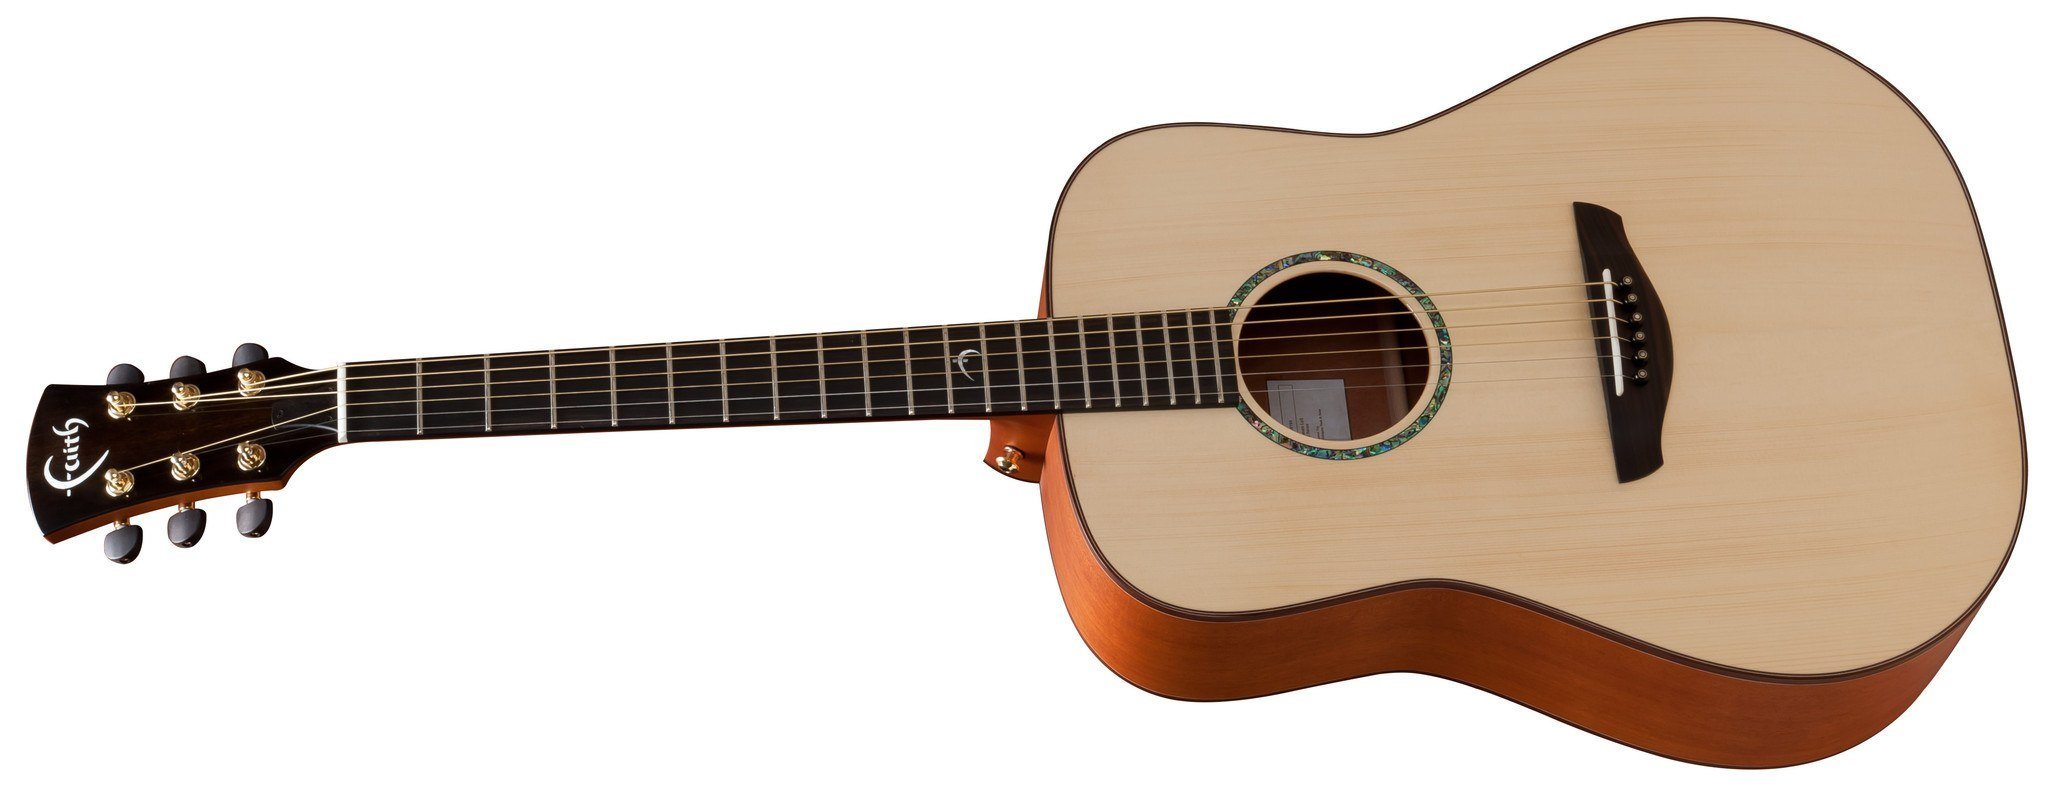 Faith FSL Acoustic Guitar (Saturn Natural Lefthanded), Acoustic Guitar for sale at Richards Guitars.